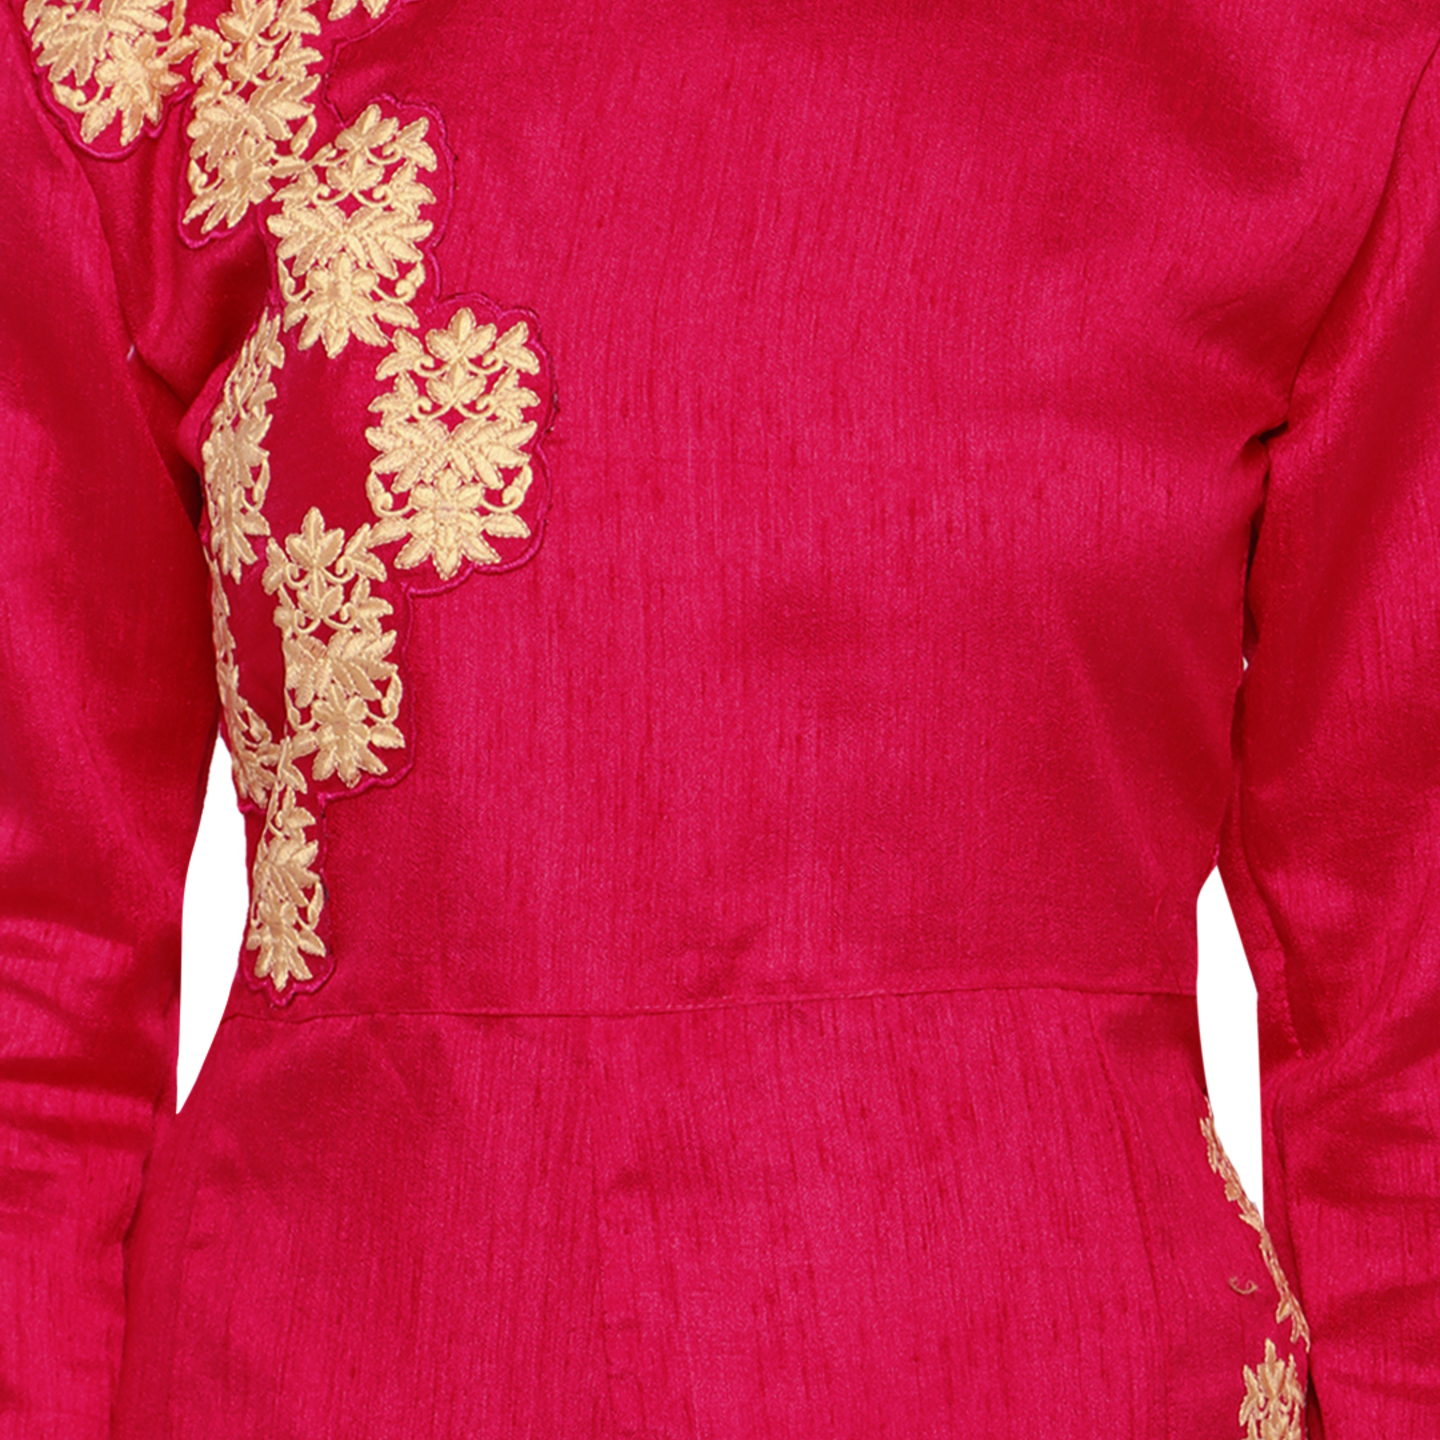 Robe Riche Pink Color Banglori Sattin Embroidered Semi-Stitched Gown 